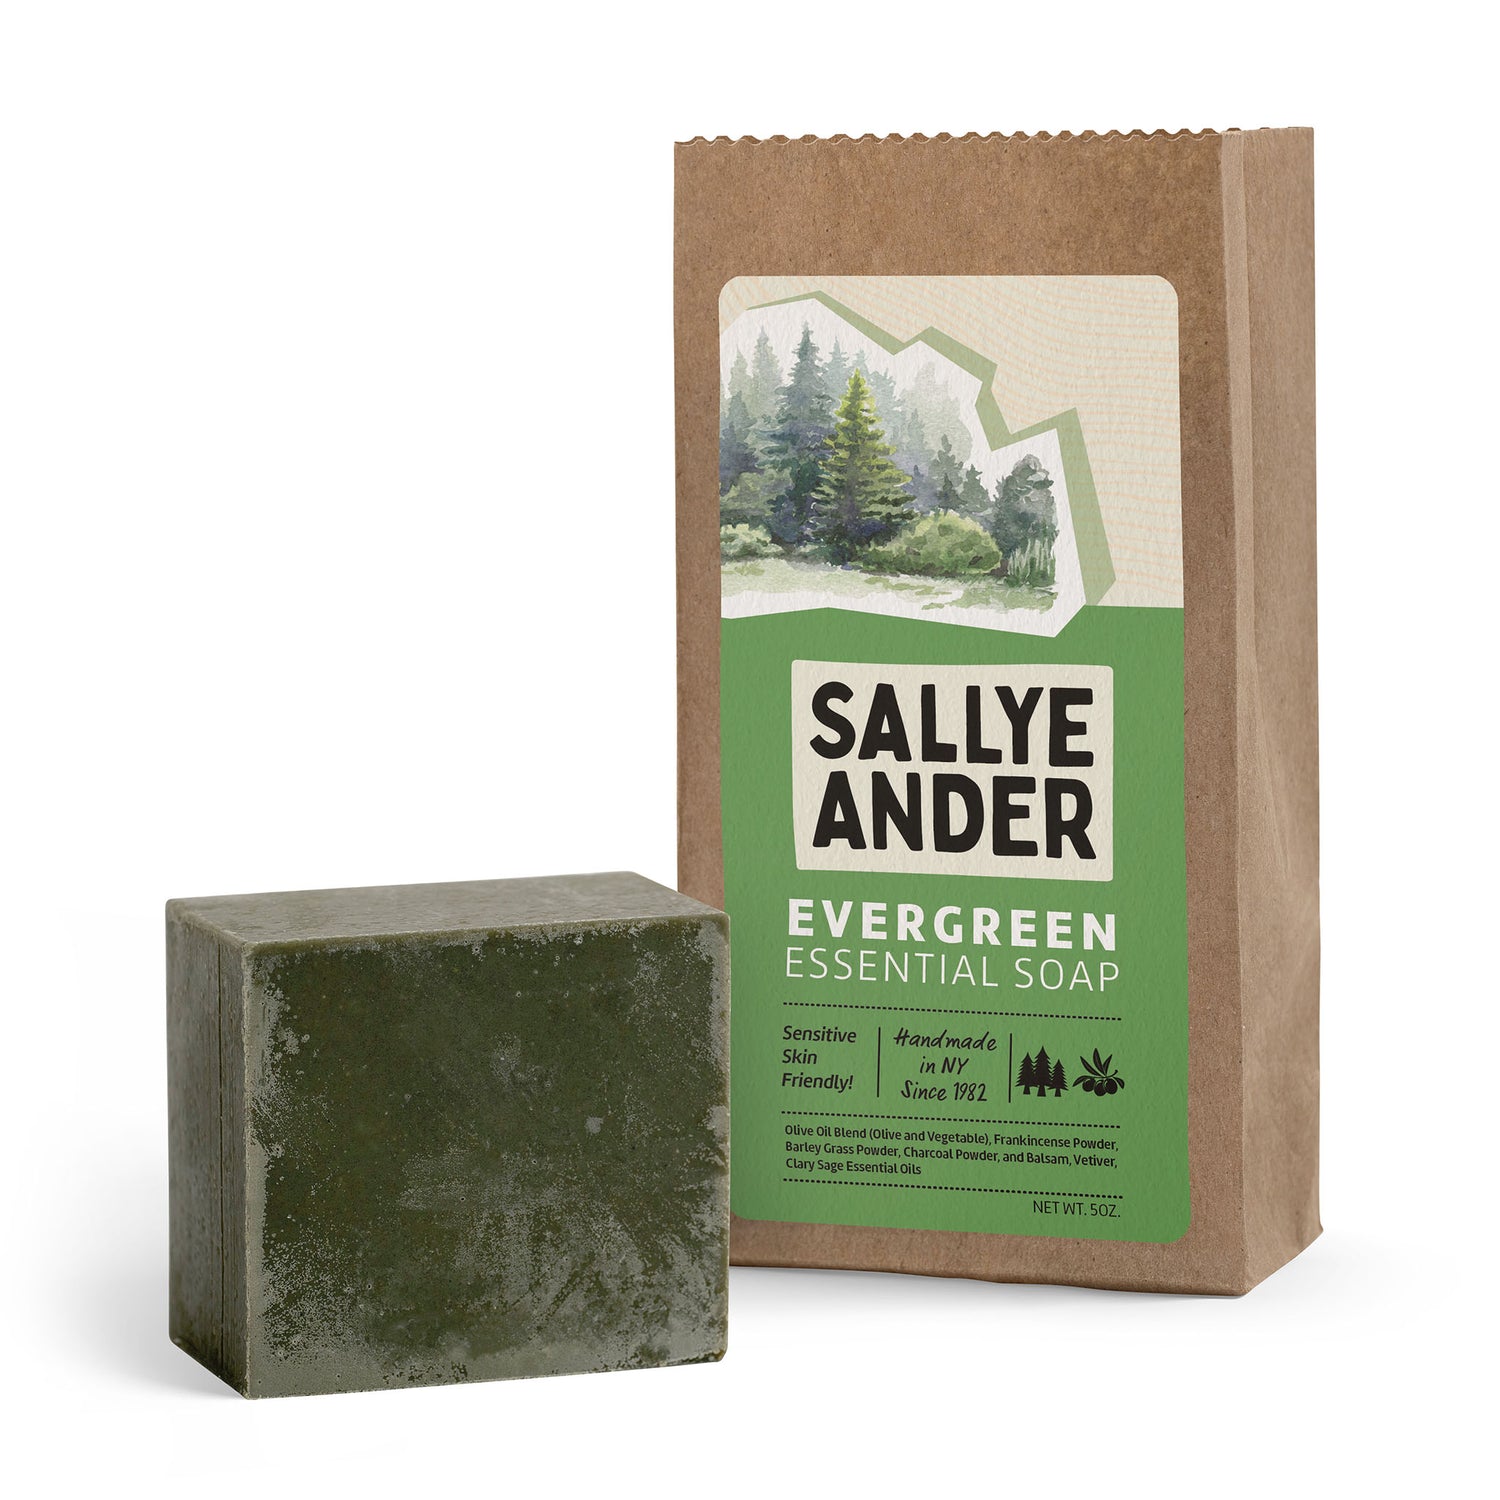 Evergreen Soap